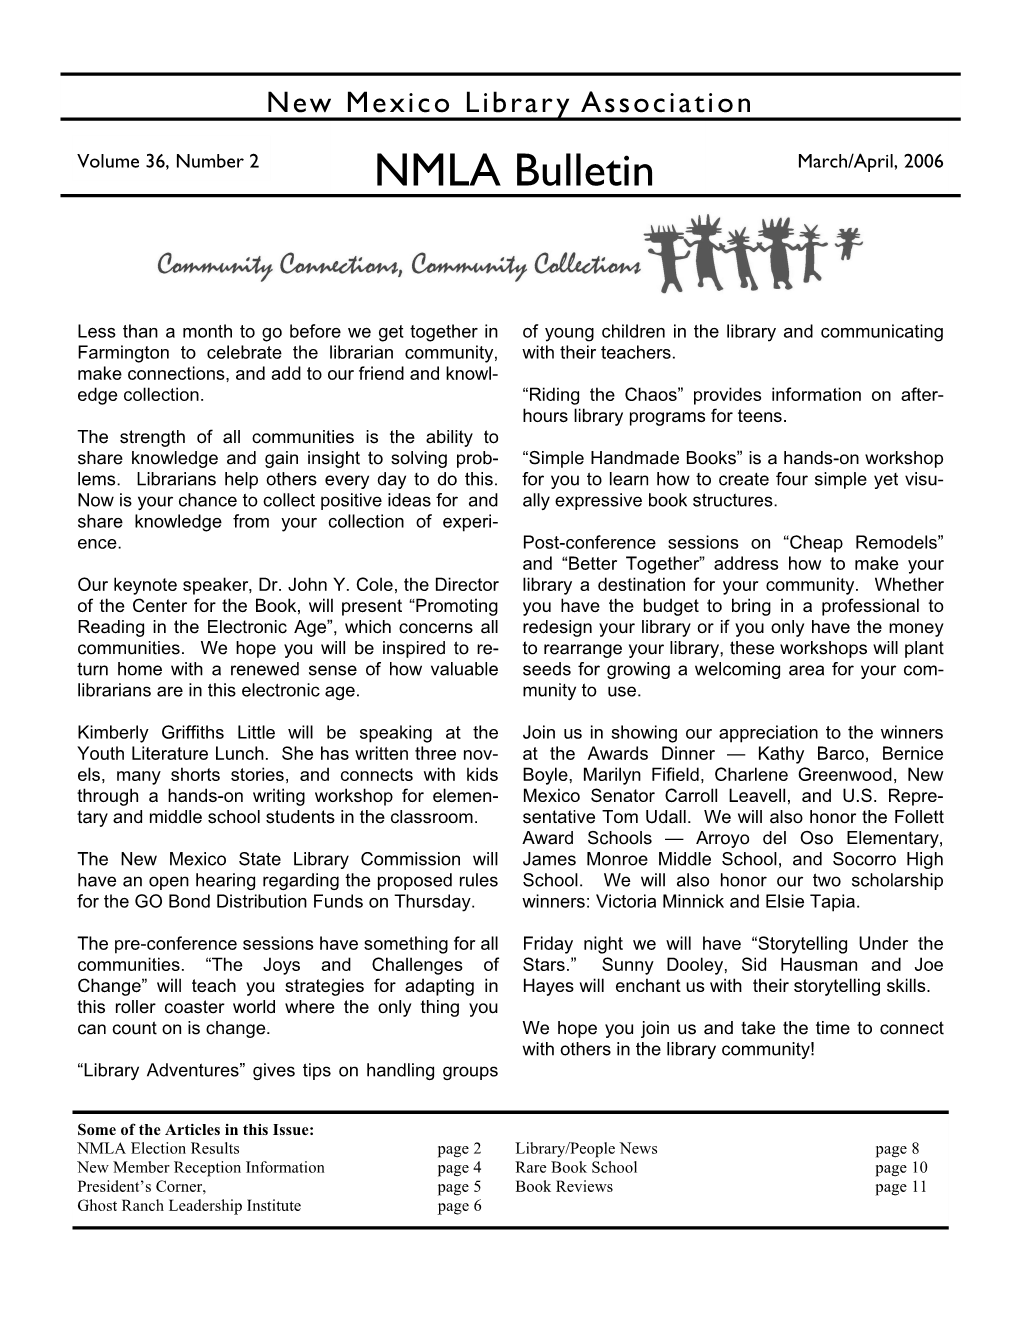 NMLA Bulletin March/April, 2006